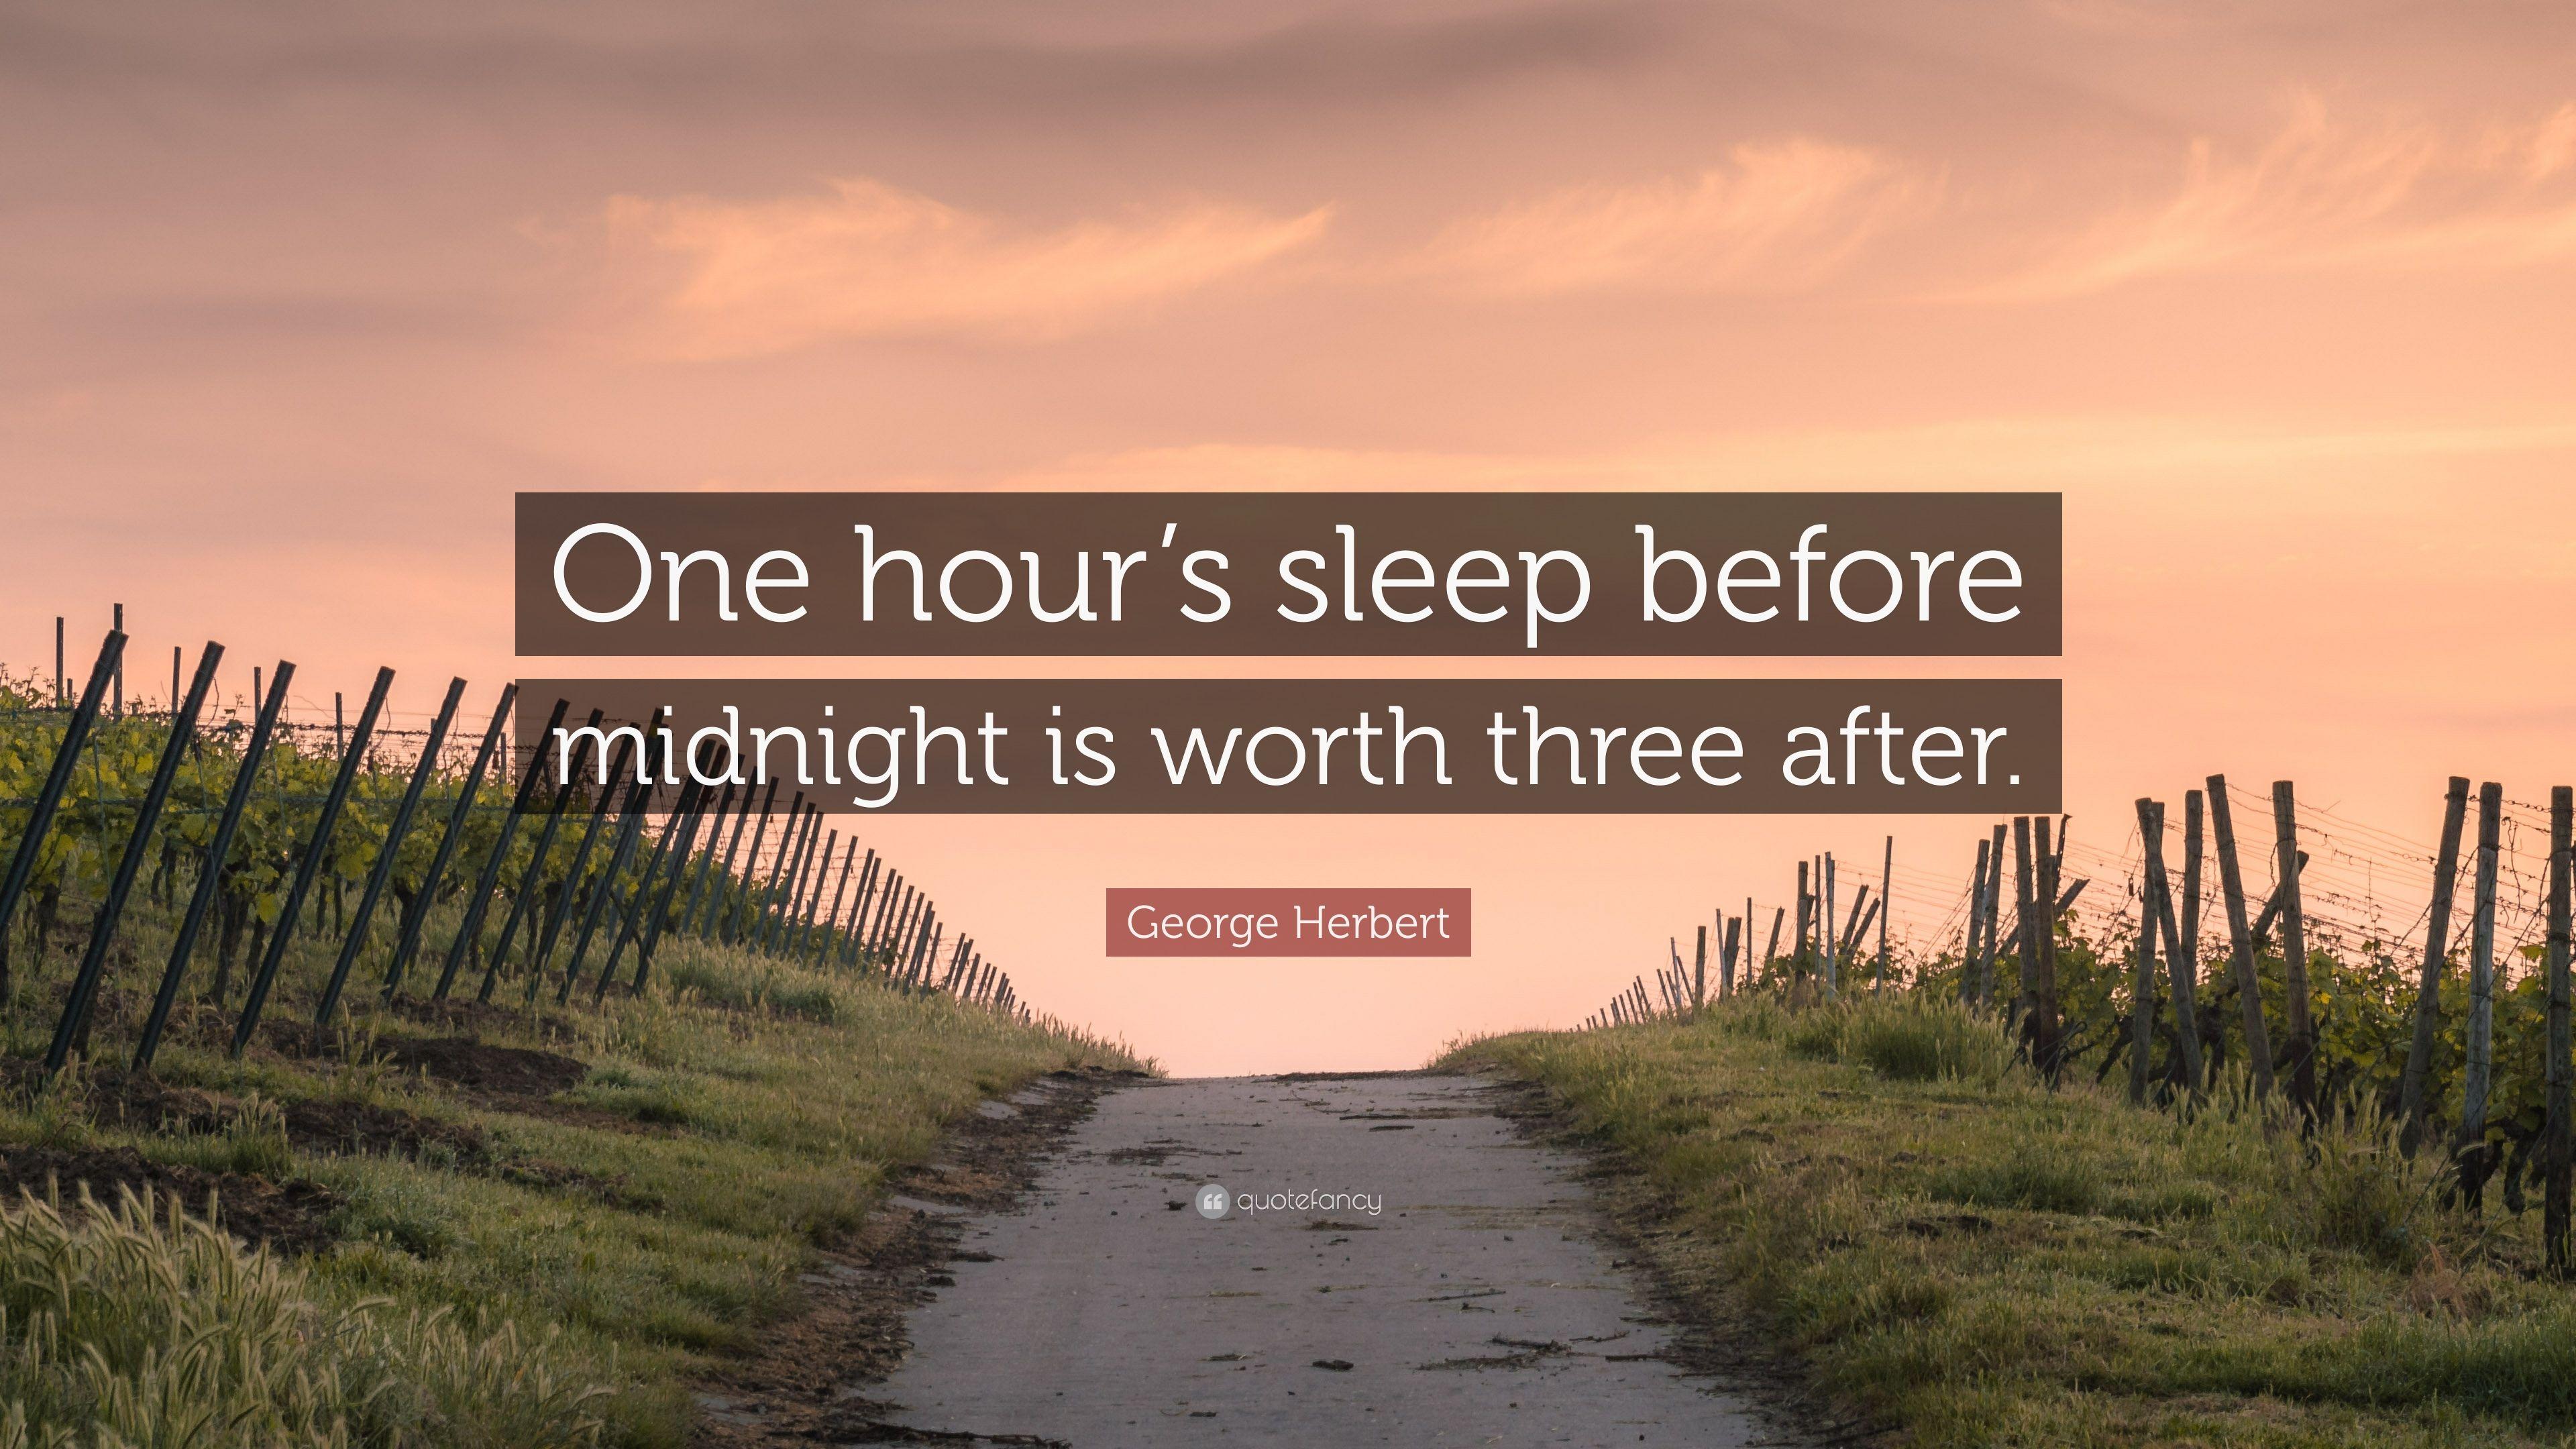 George Herbert Quote: “One hour's sleep before midnight is